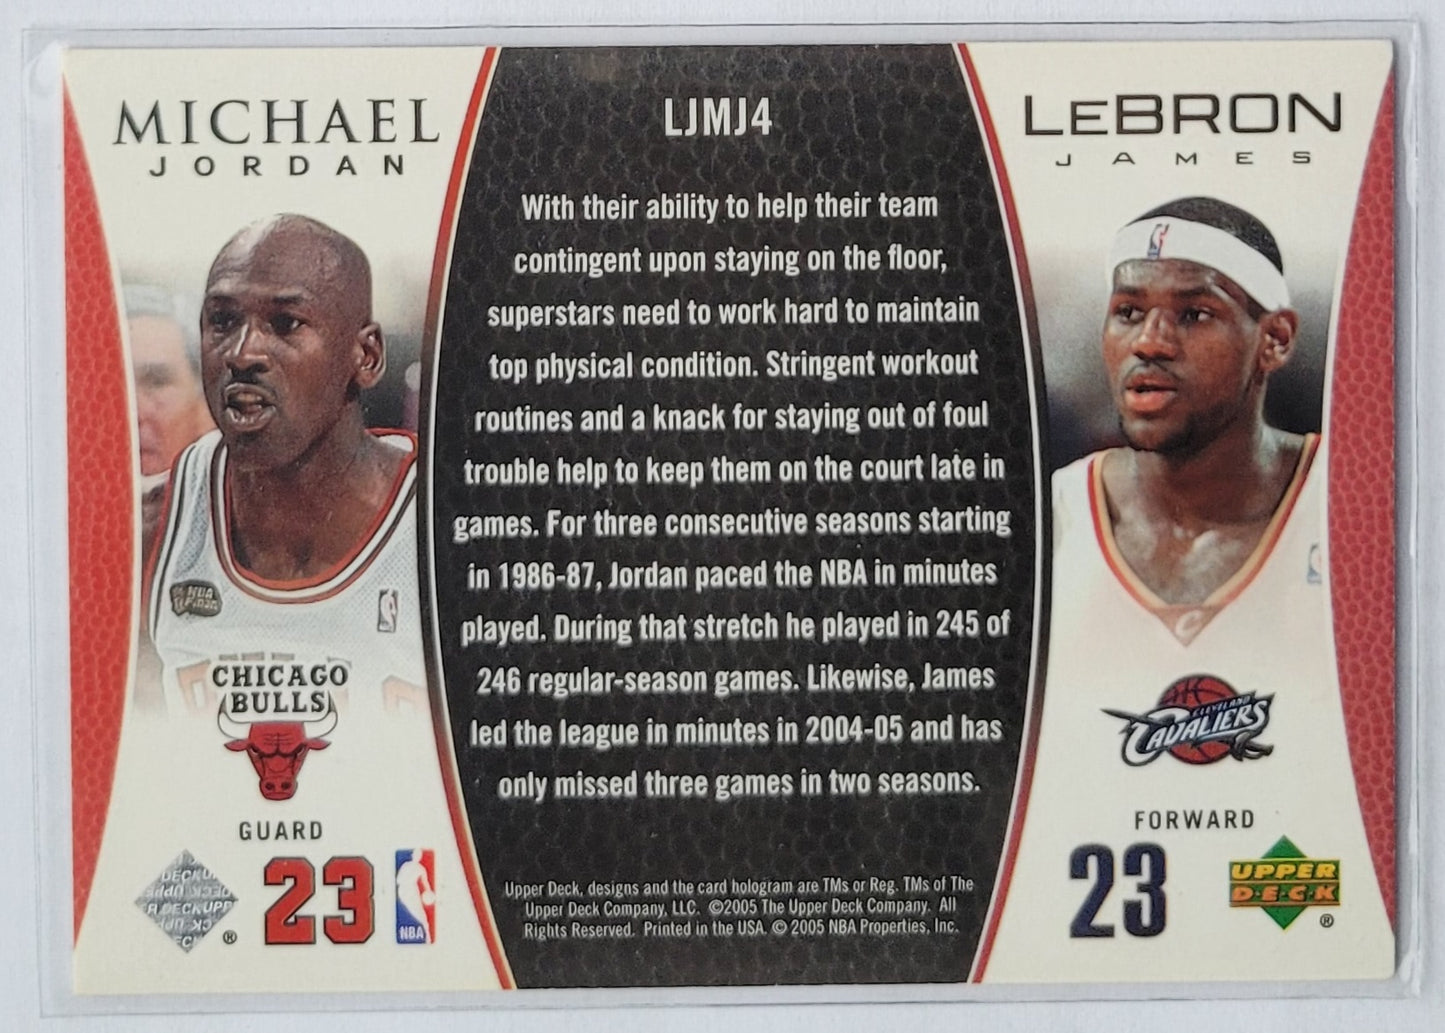 Michael Jordan / LeBron James - 2005-06 Upper Deck Michael Jordan/LeBron James #LJMJ4